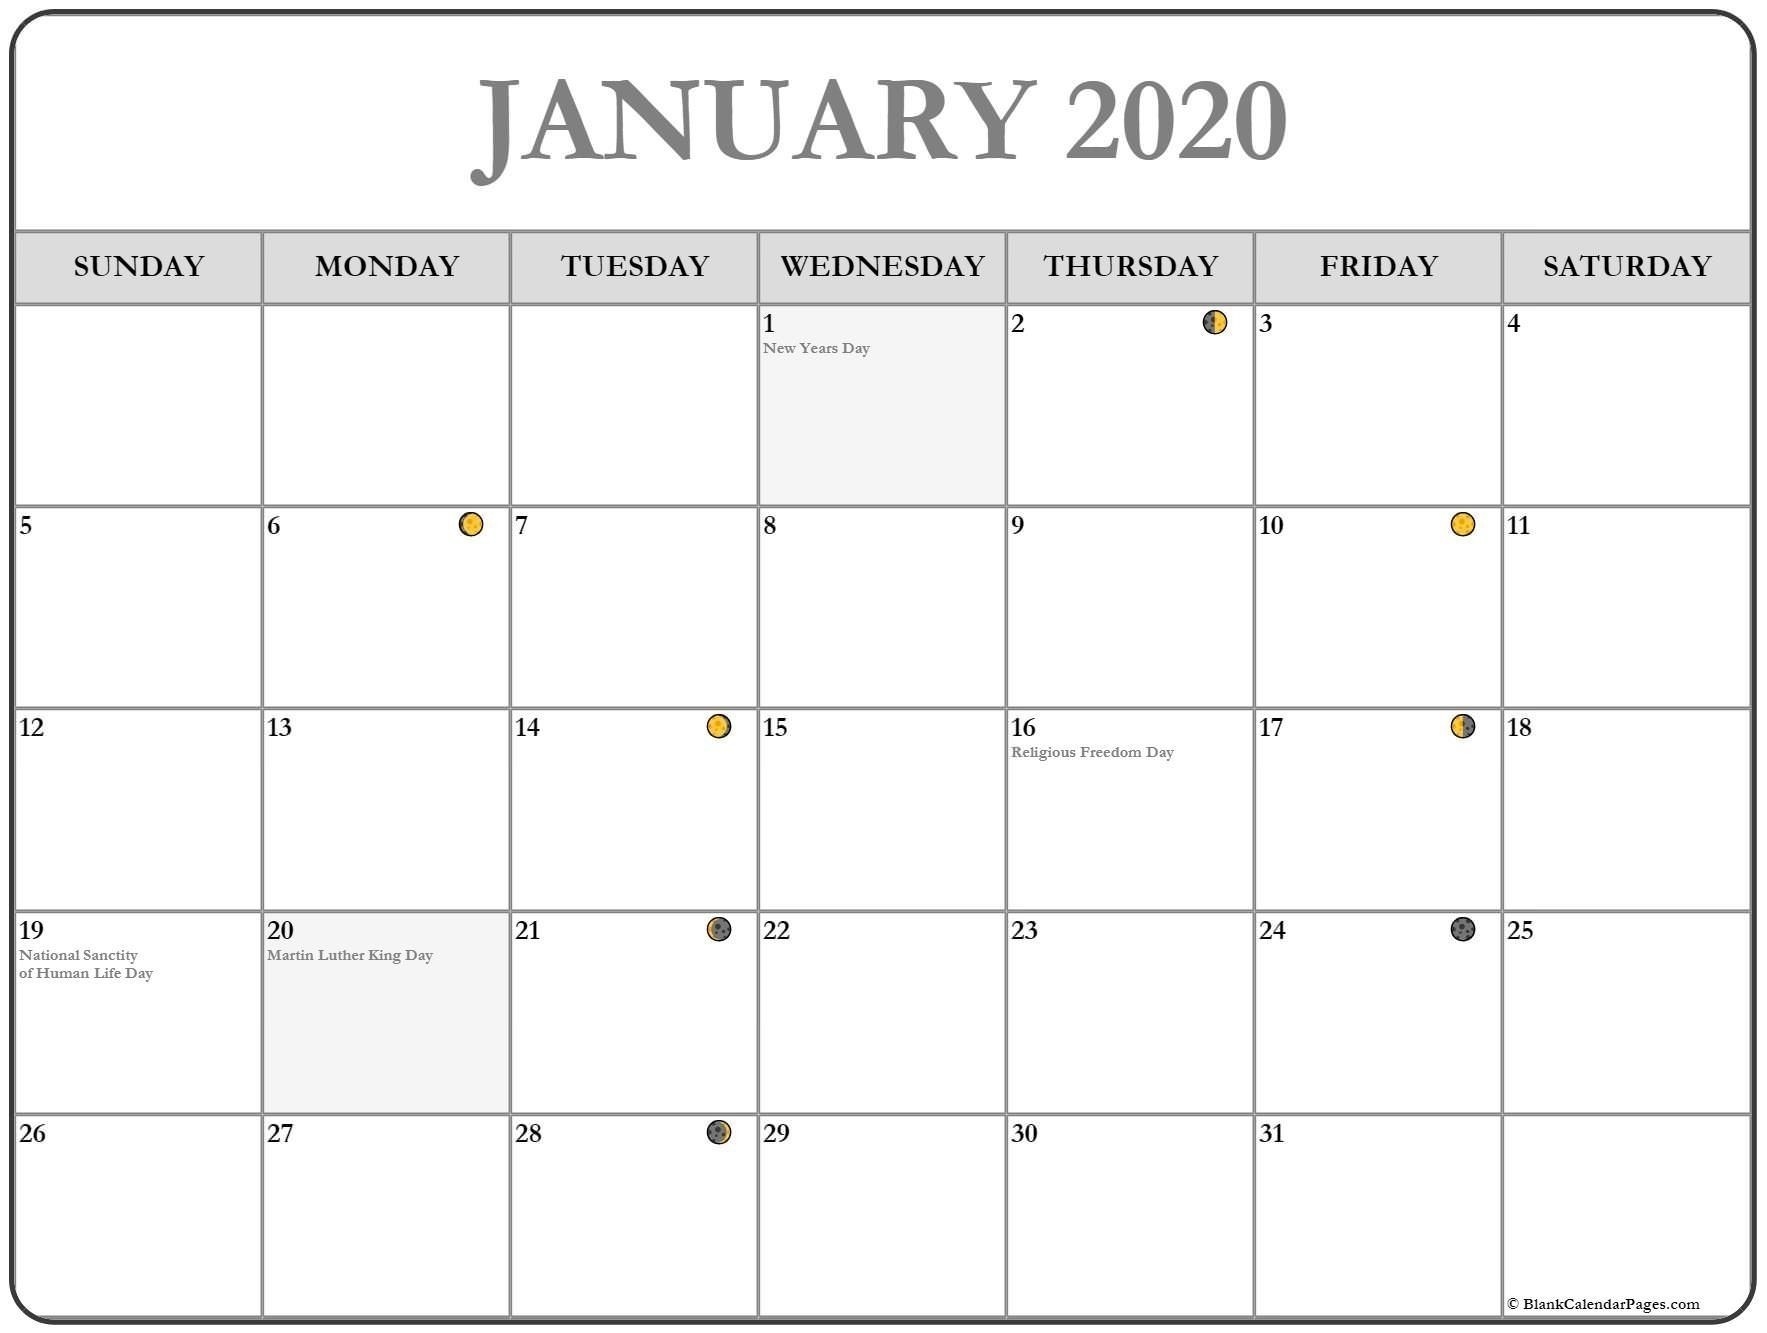 December 2019 January 2020 Calendar Printable | Calendar-January 2020 Calendar Kannada